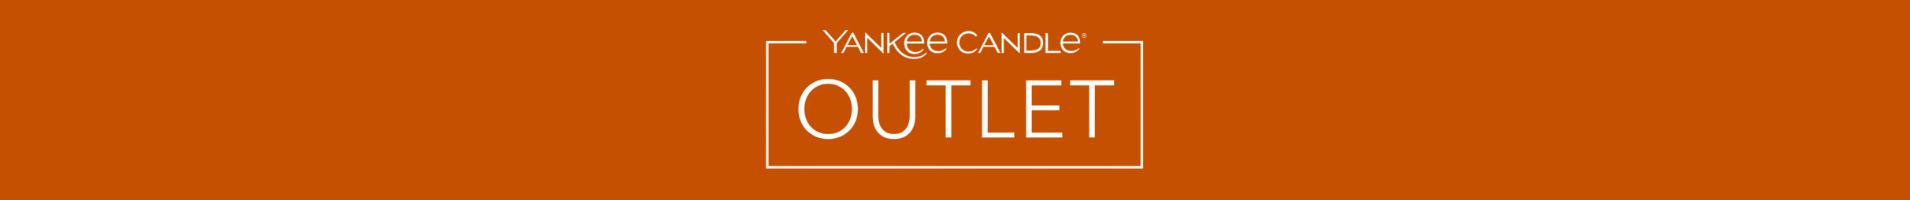 Yankee Candle Outlet bestellen